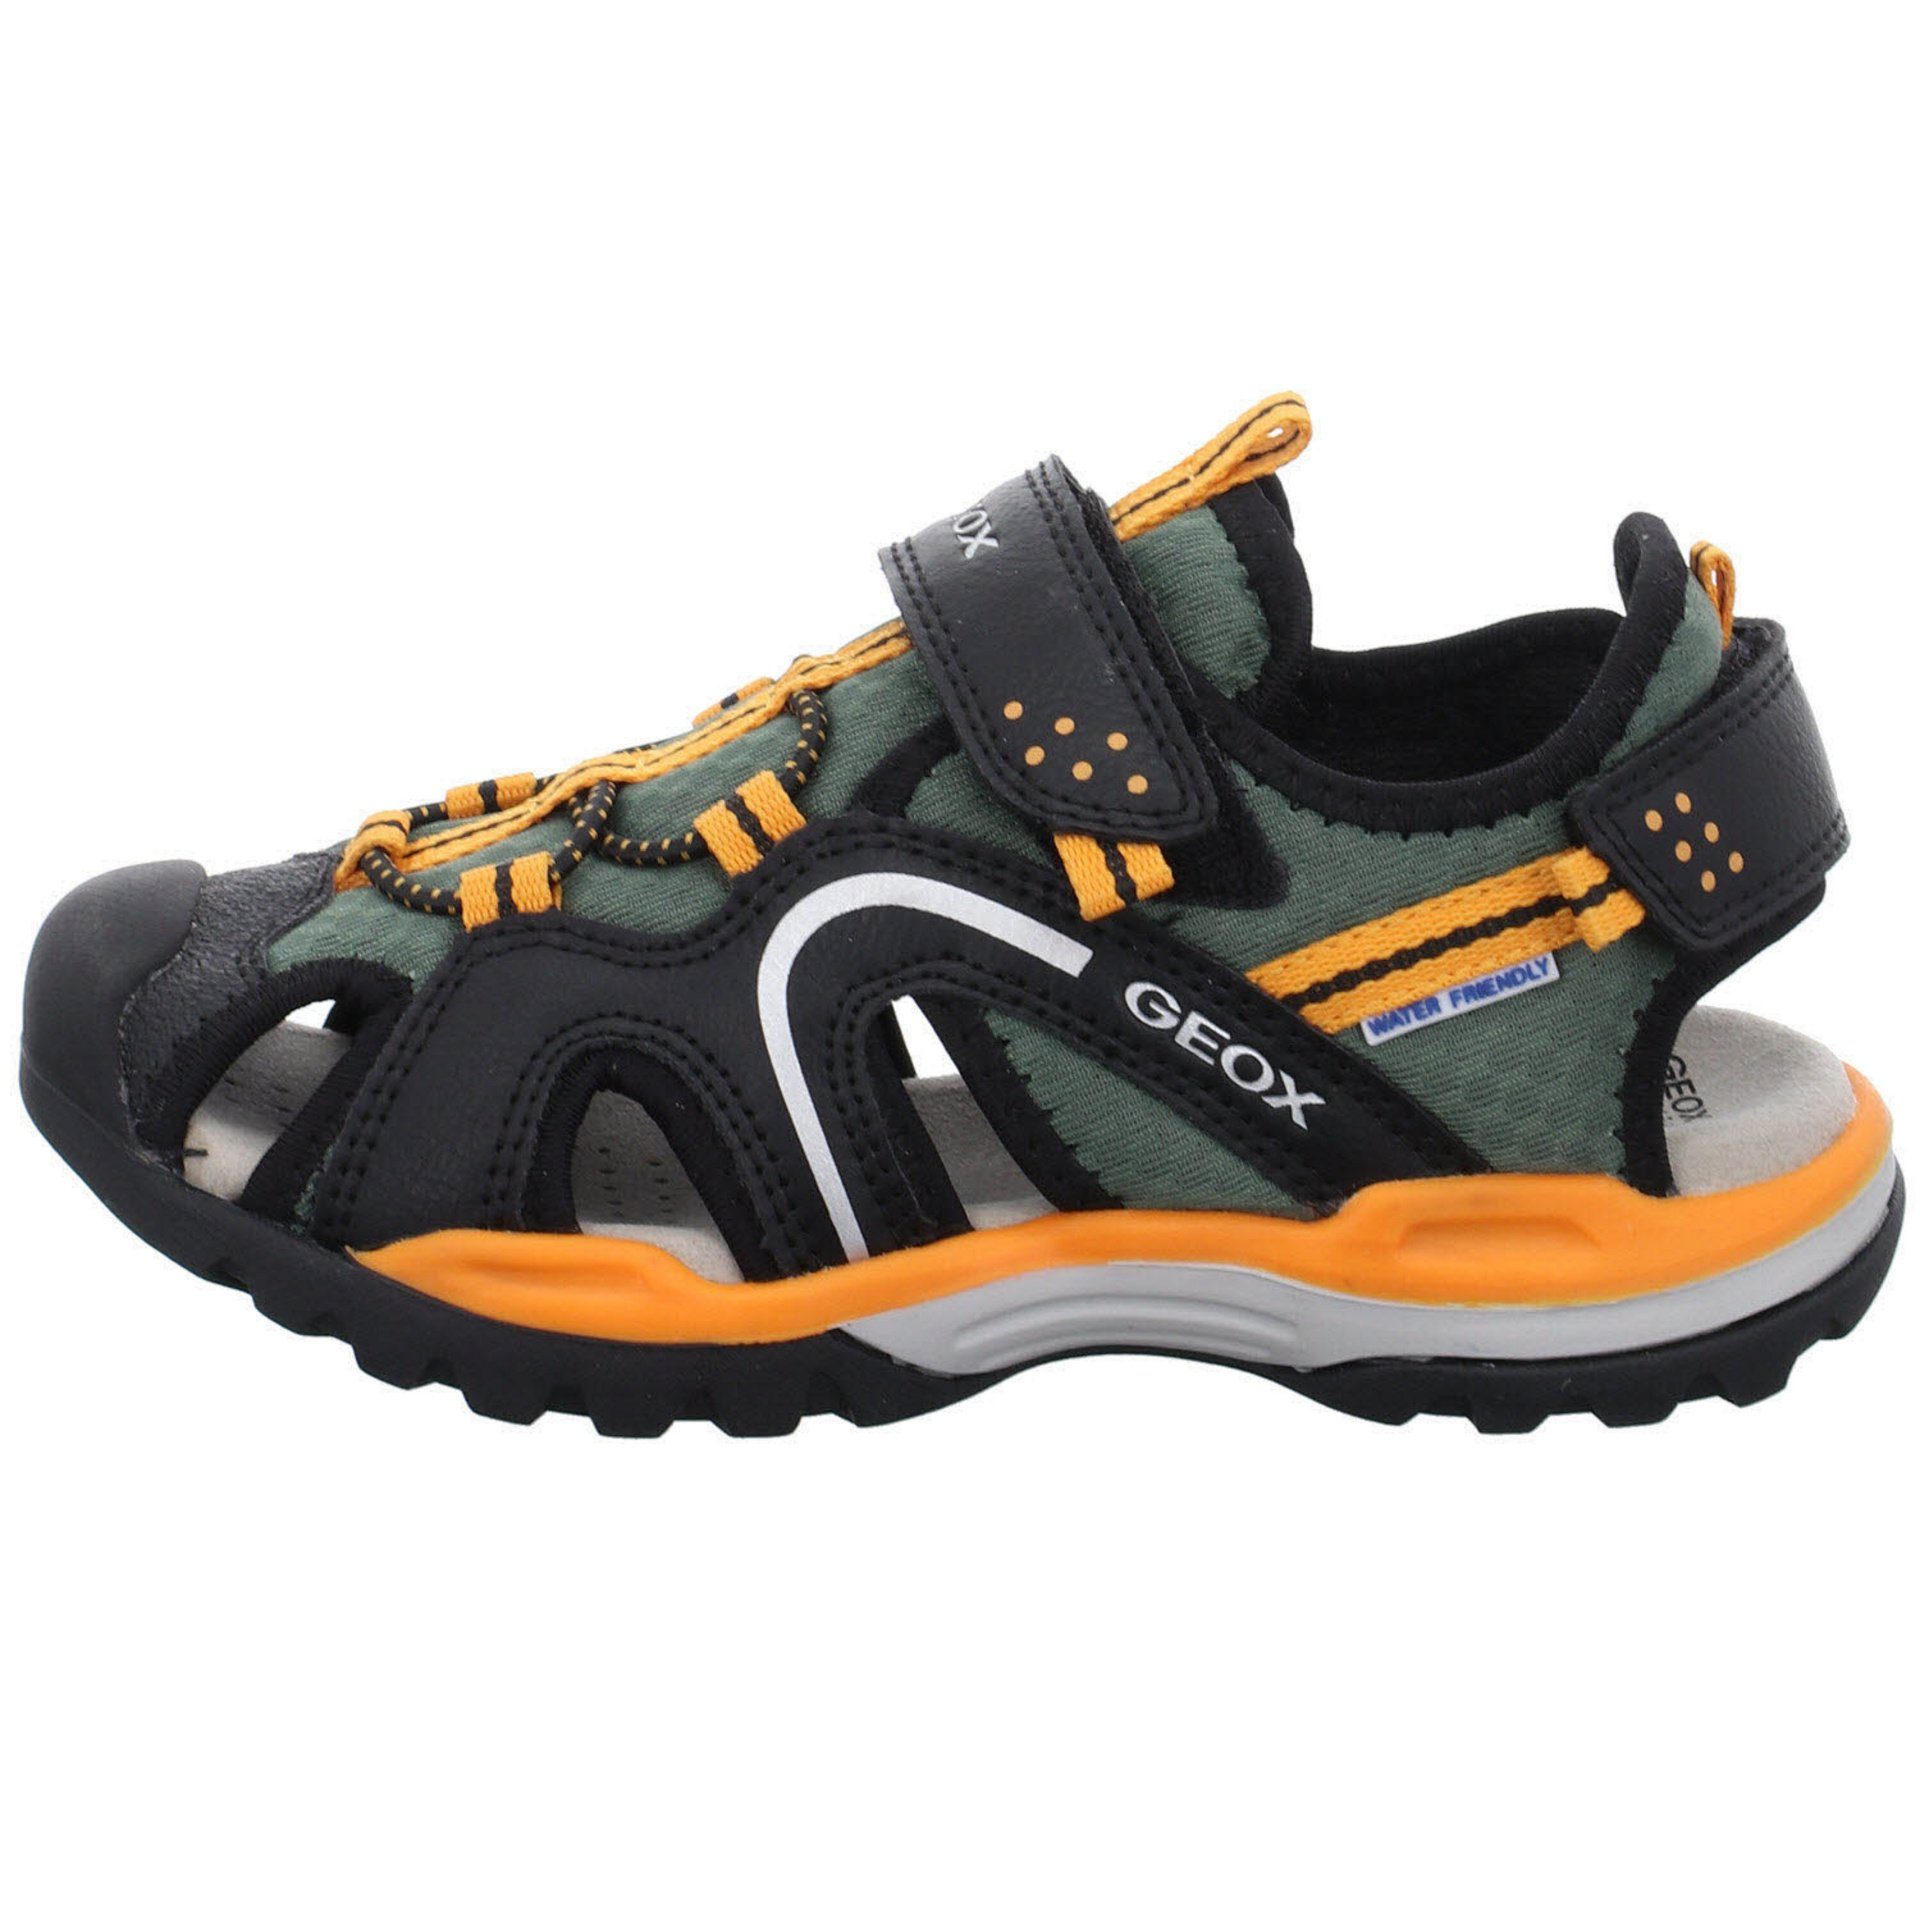 Geox Outdoorsandale Synthetikkombination Schwarz Schuhe Sandale Sandalen Borealis Orange Jungen